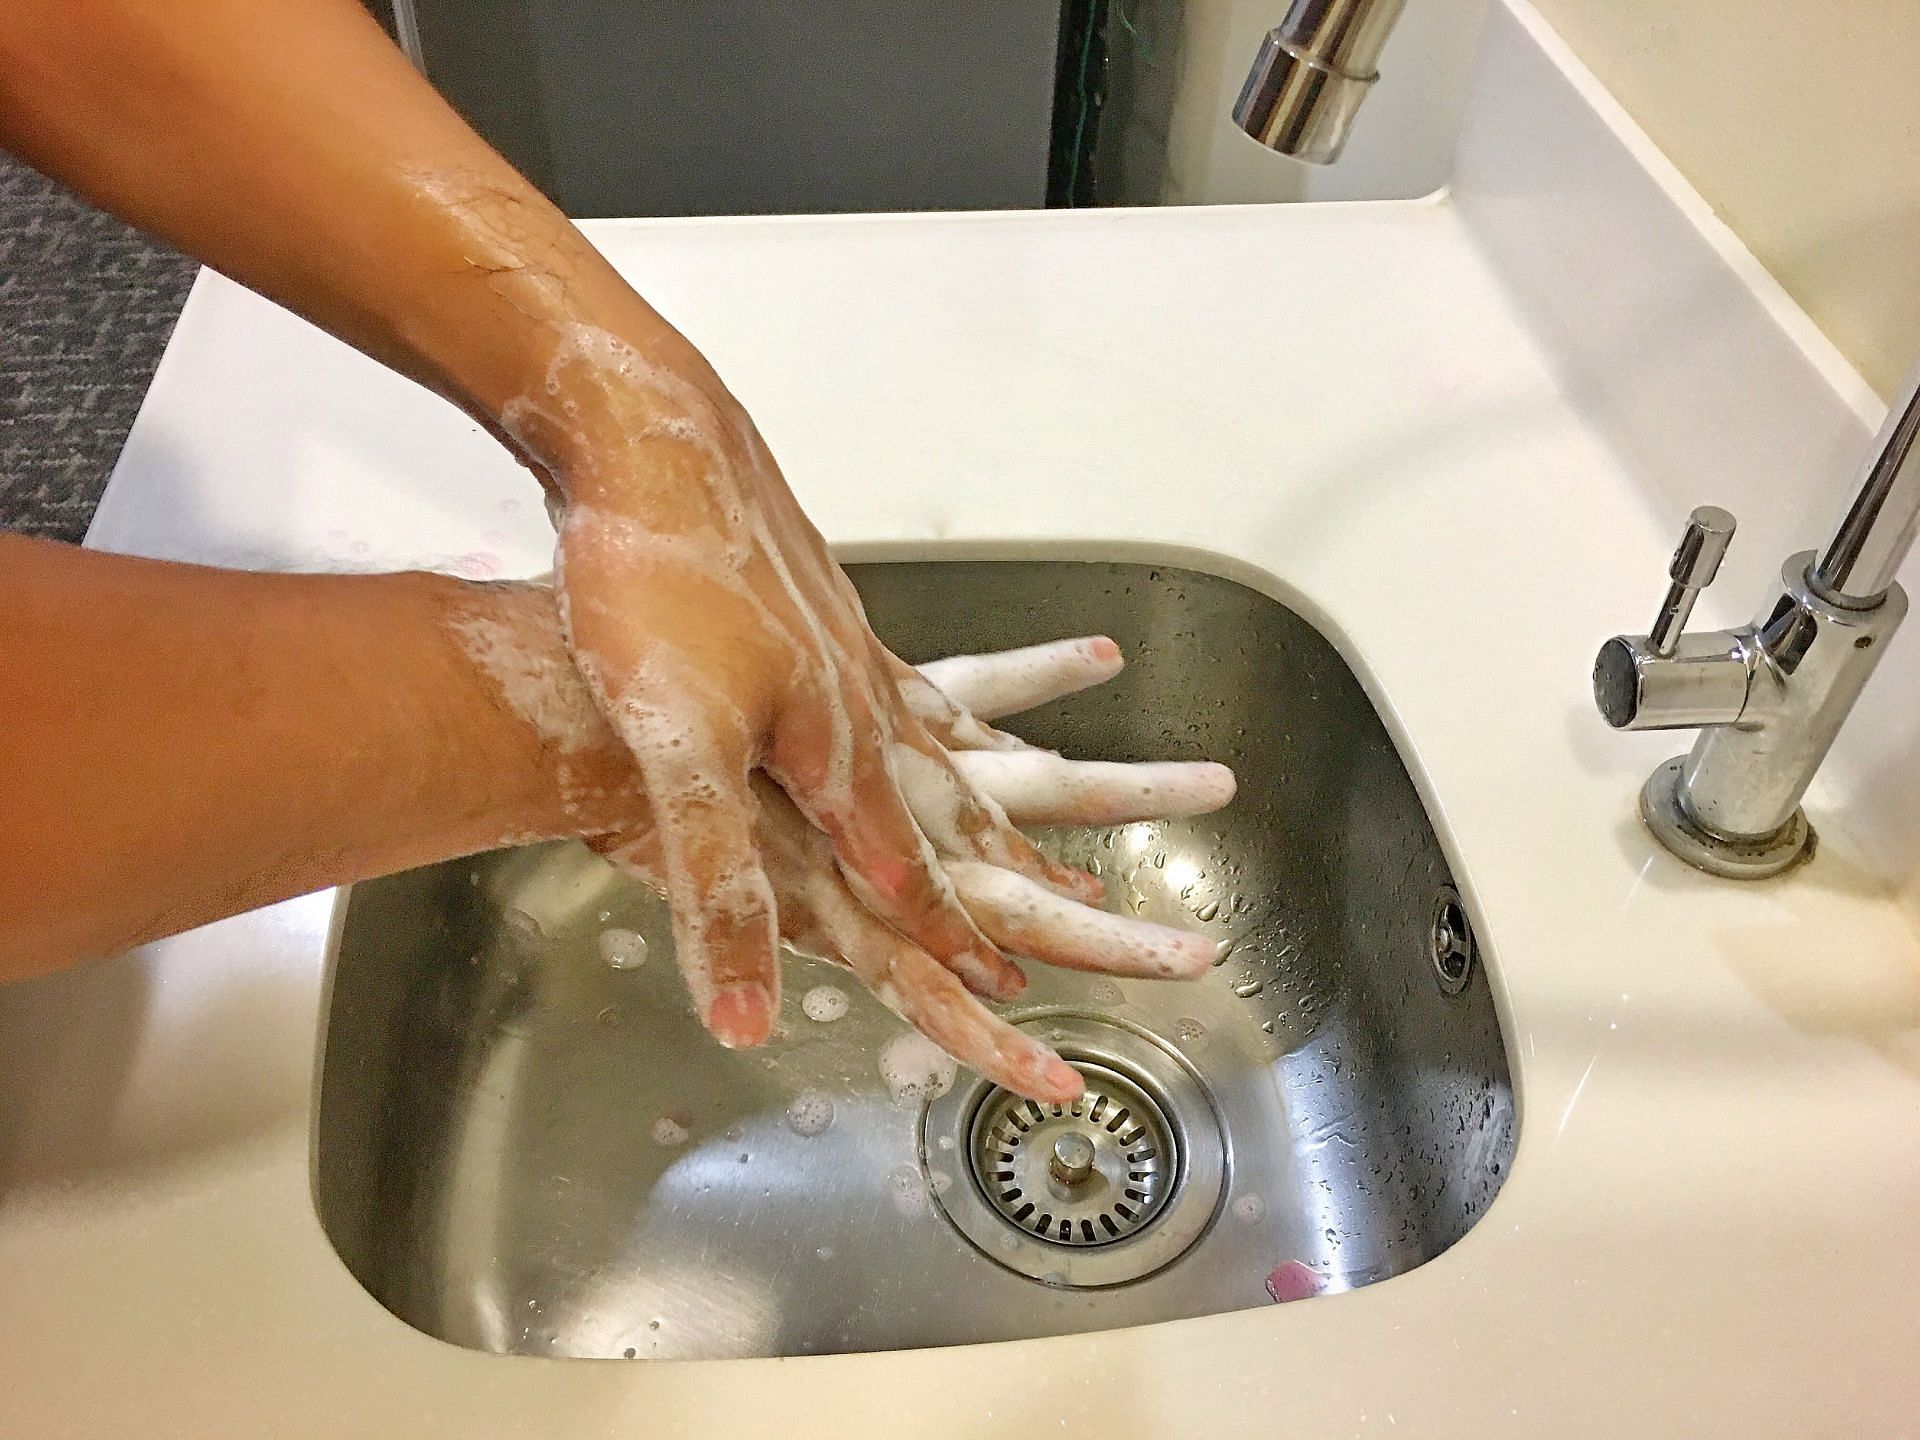 Ensure proper hygiene. (Image via Unsplash/Kristine Wook)